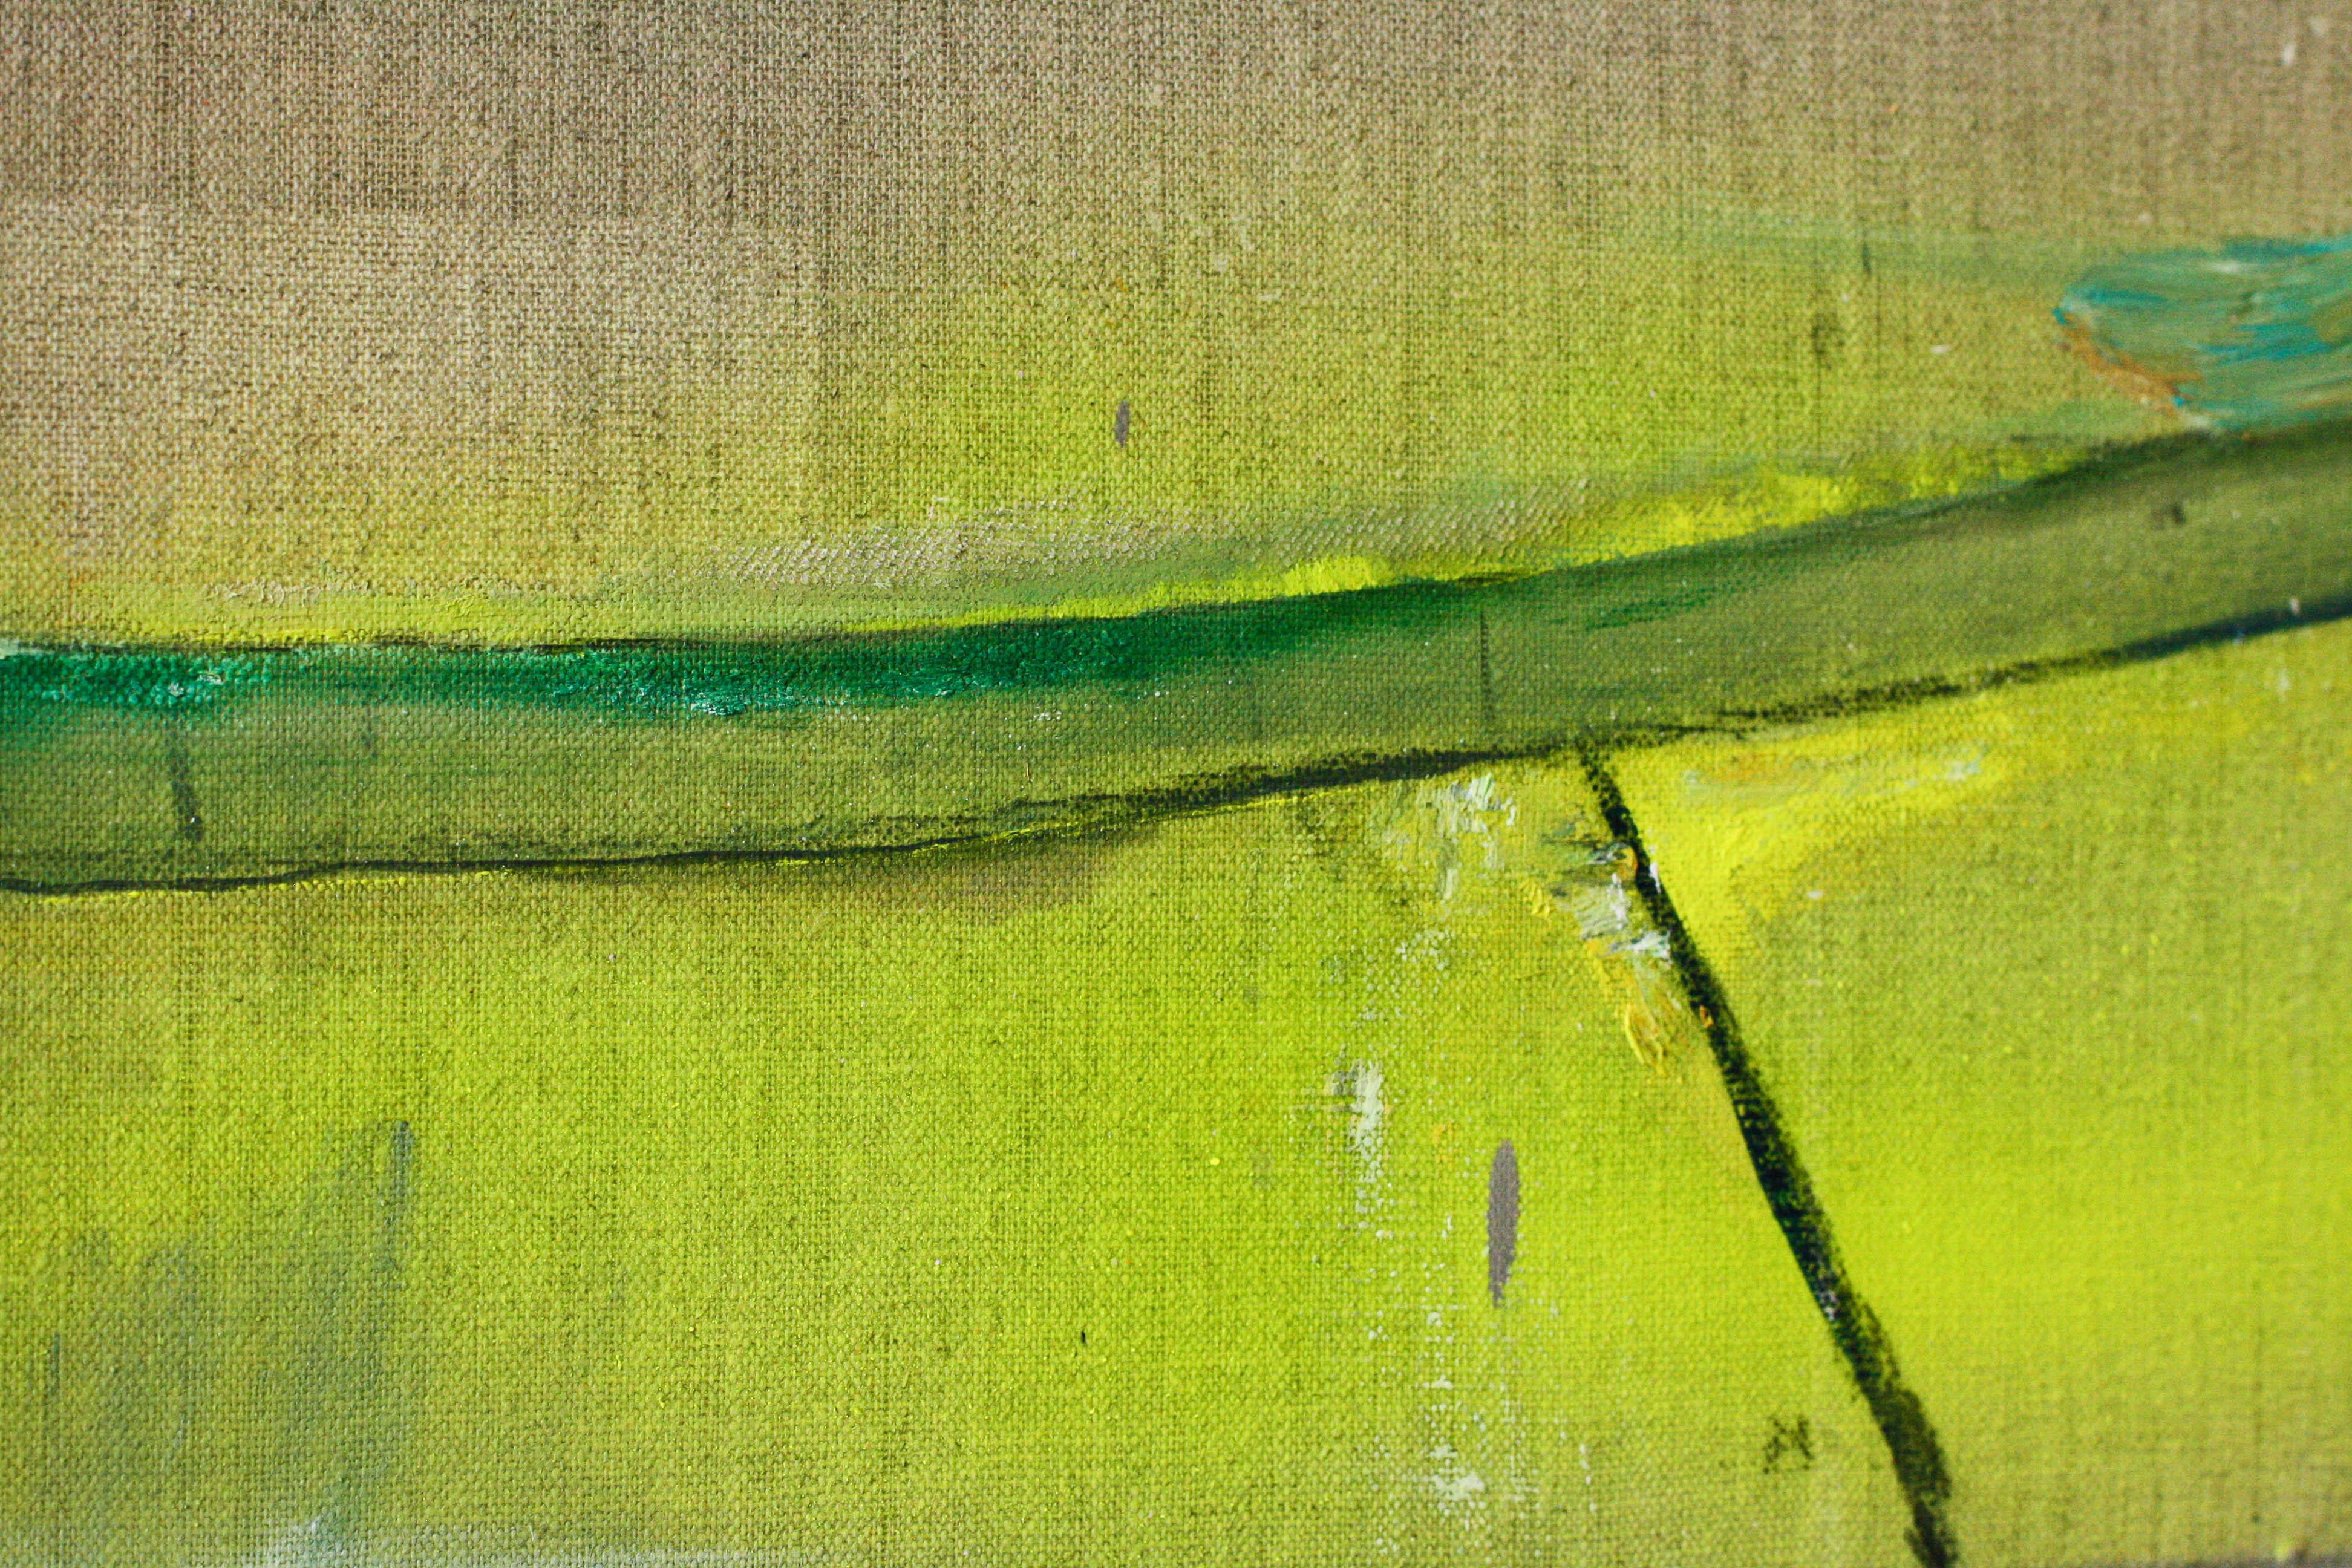 swamp green crayon